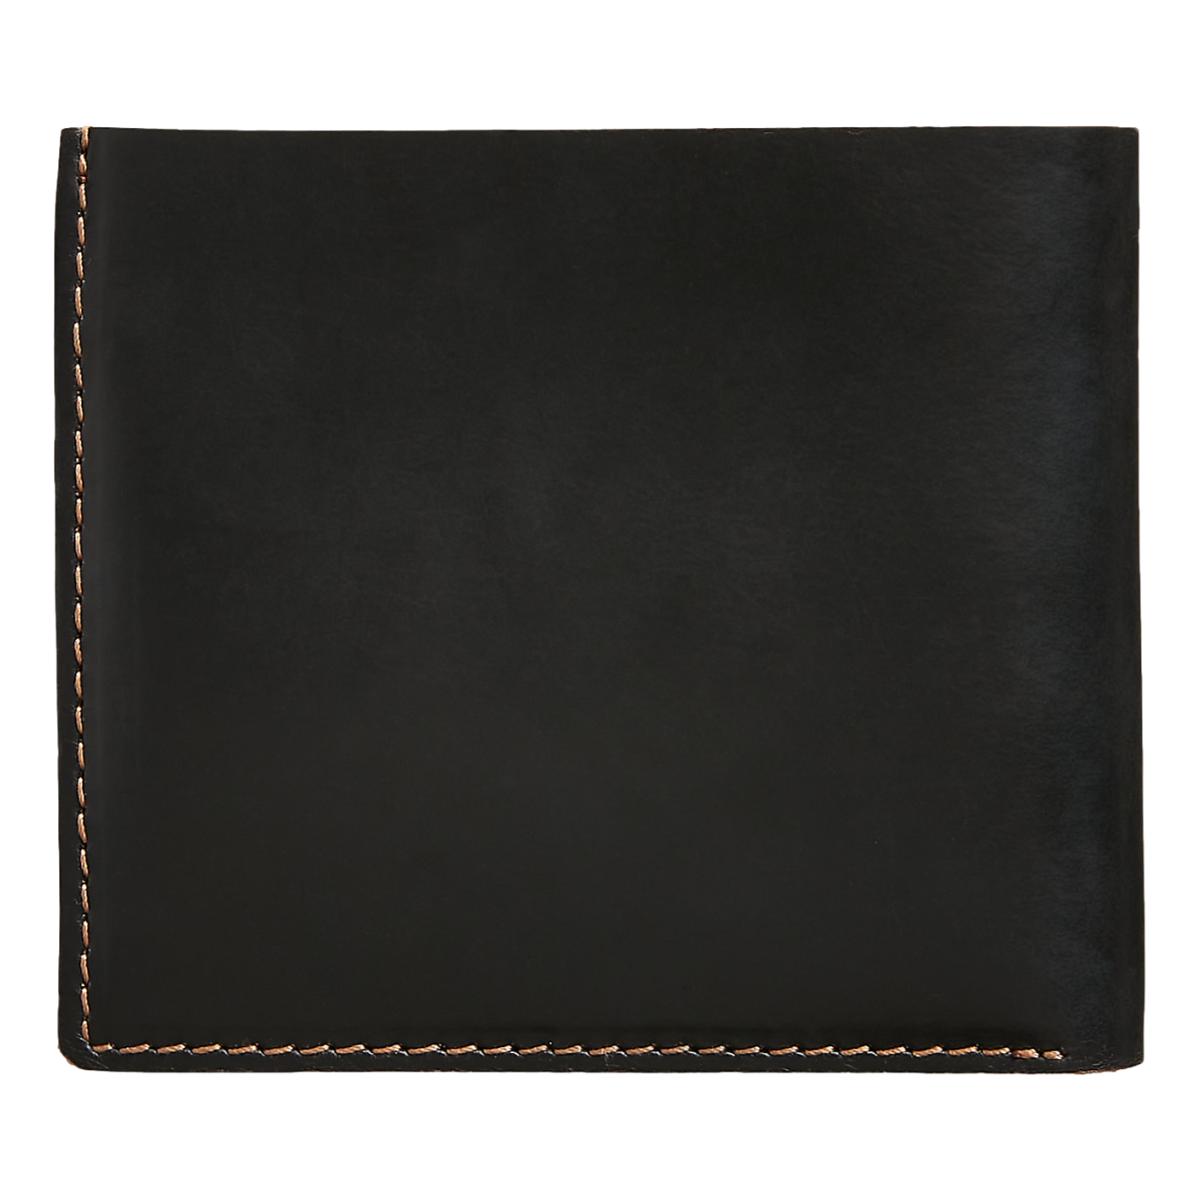 Leather Billfold Black Over Brown - Wallet